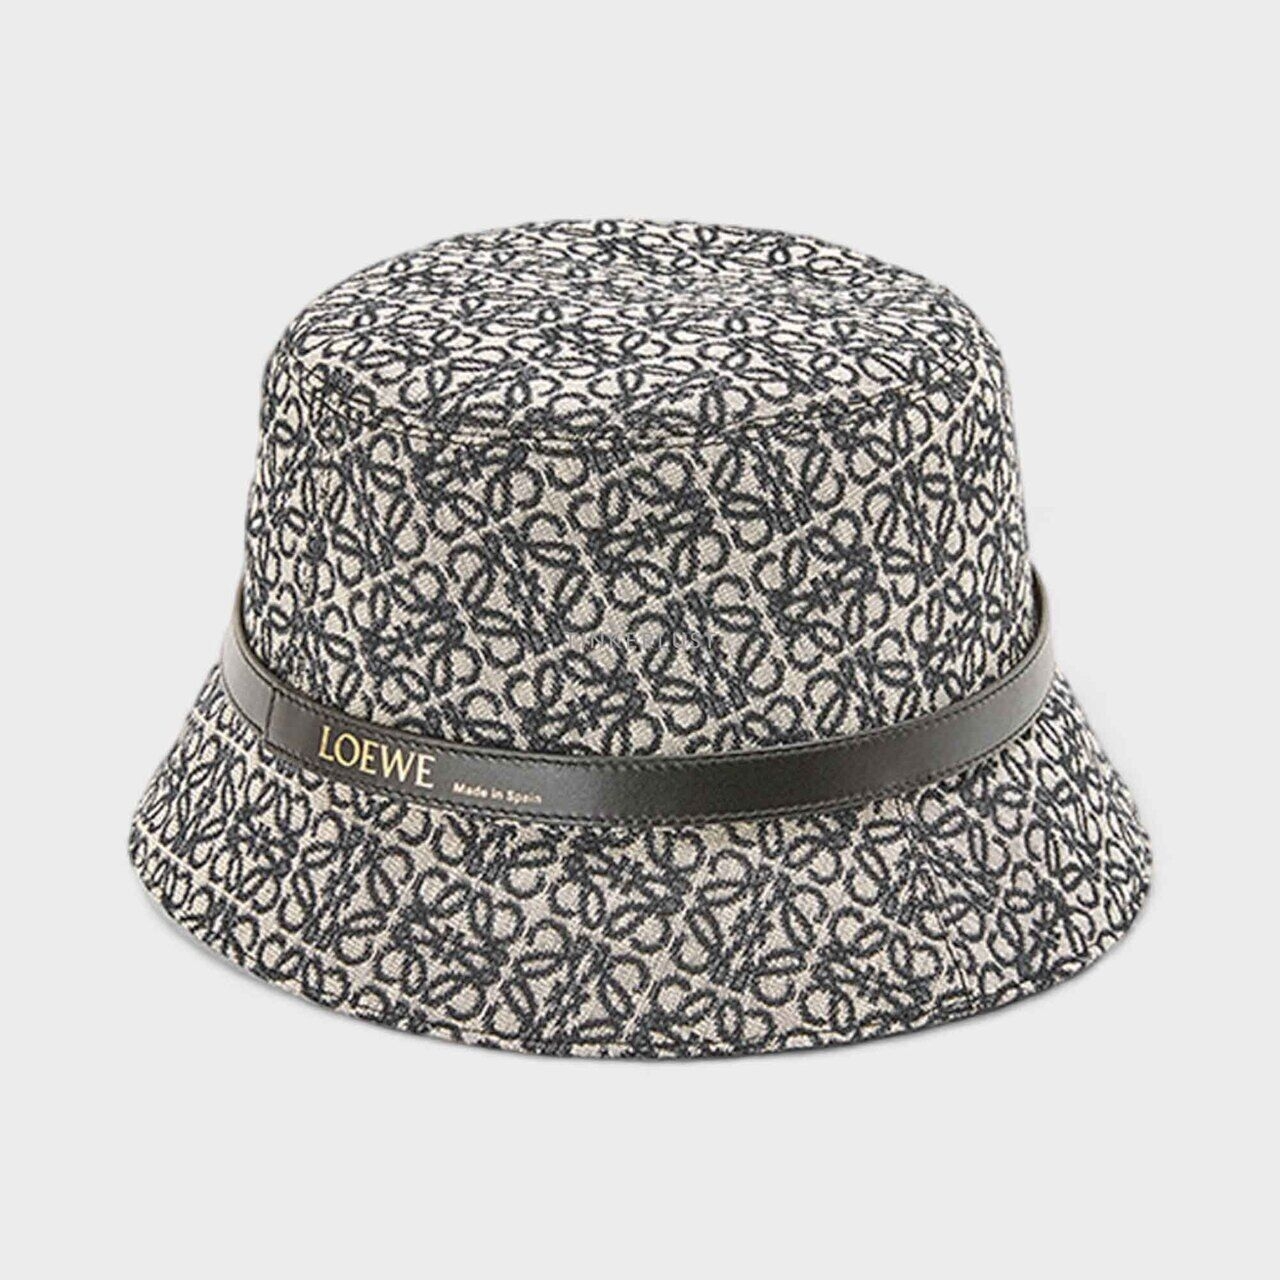 Loewe All Over Anagram Bucket Hat in Navy/Black Jacquard